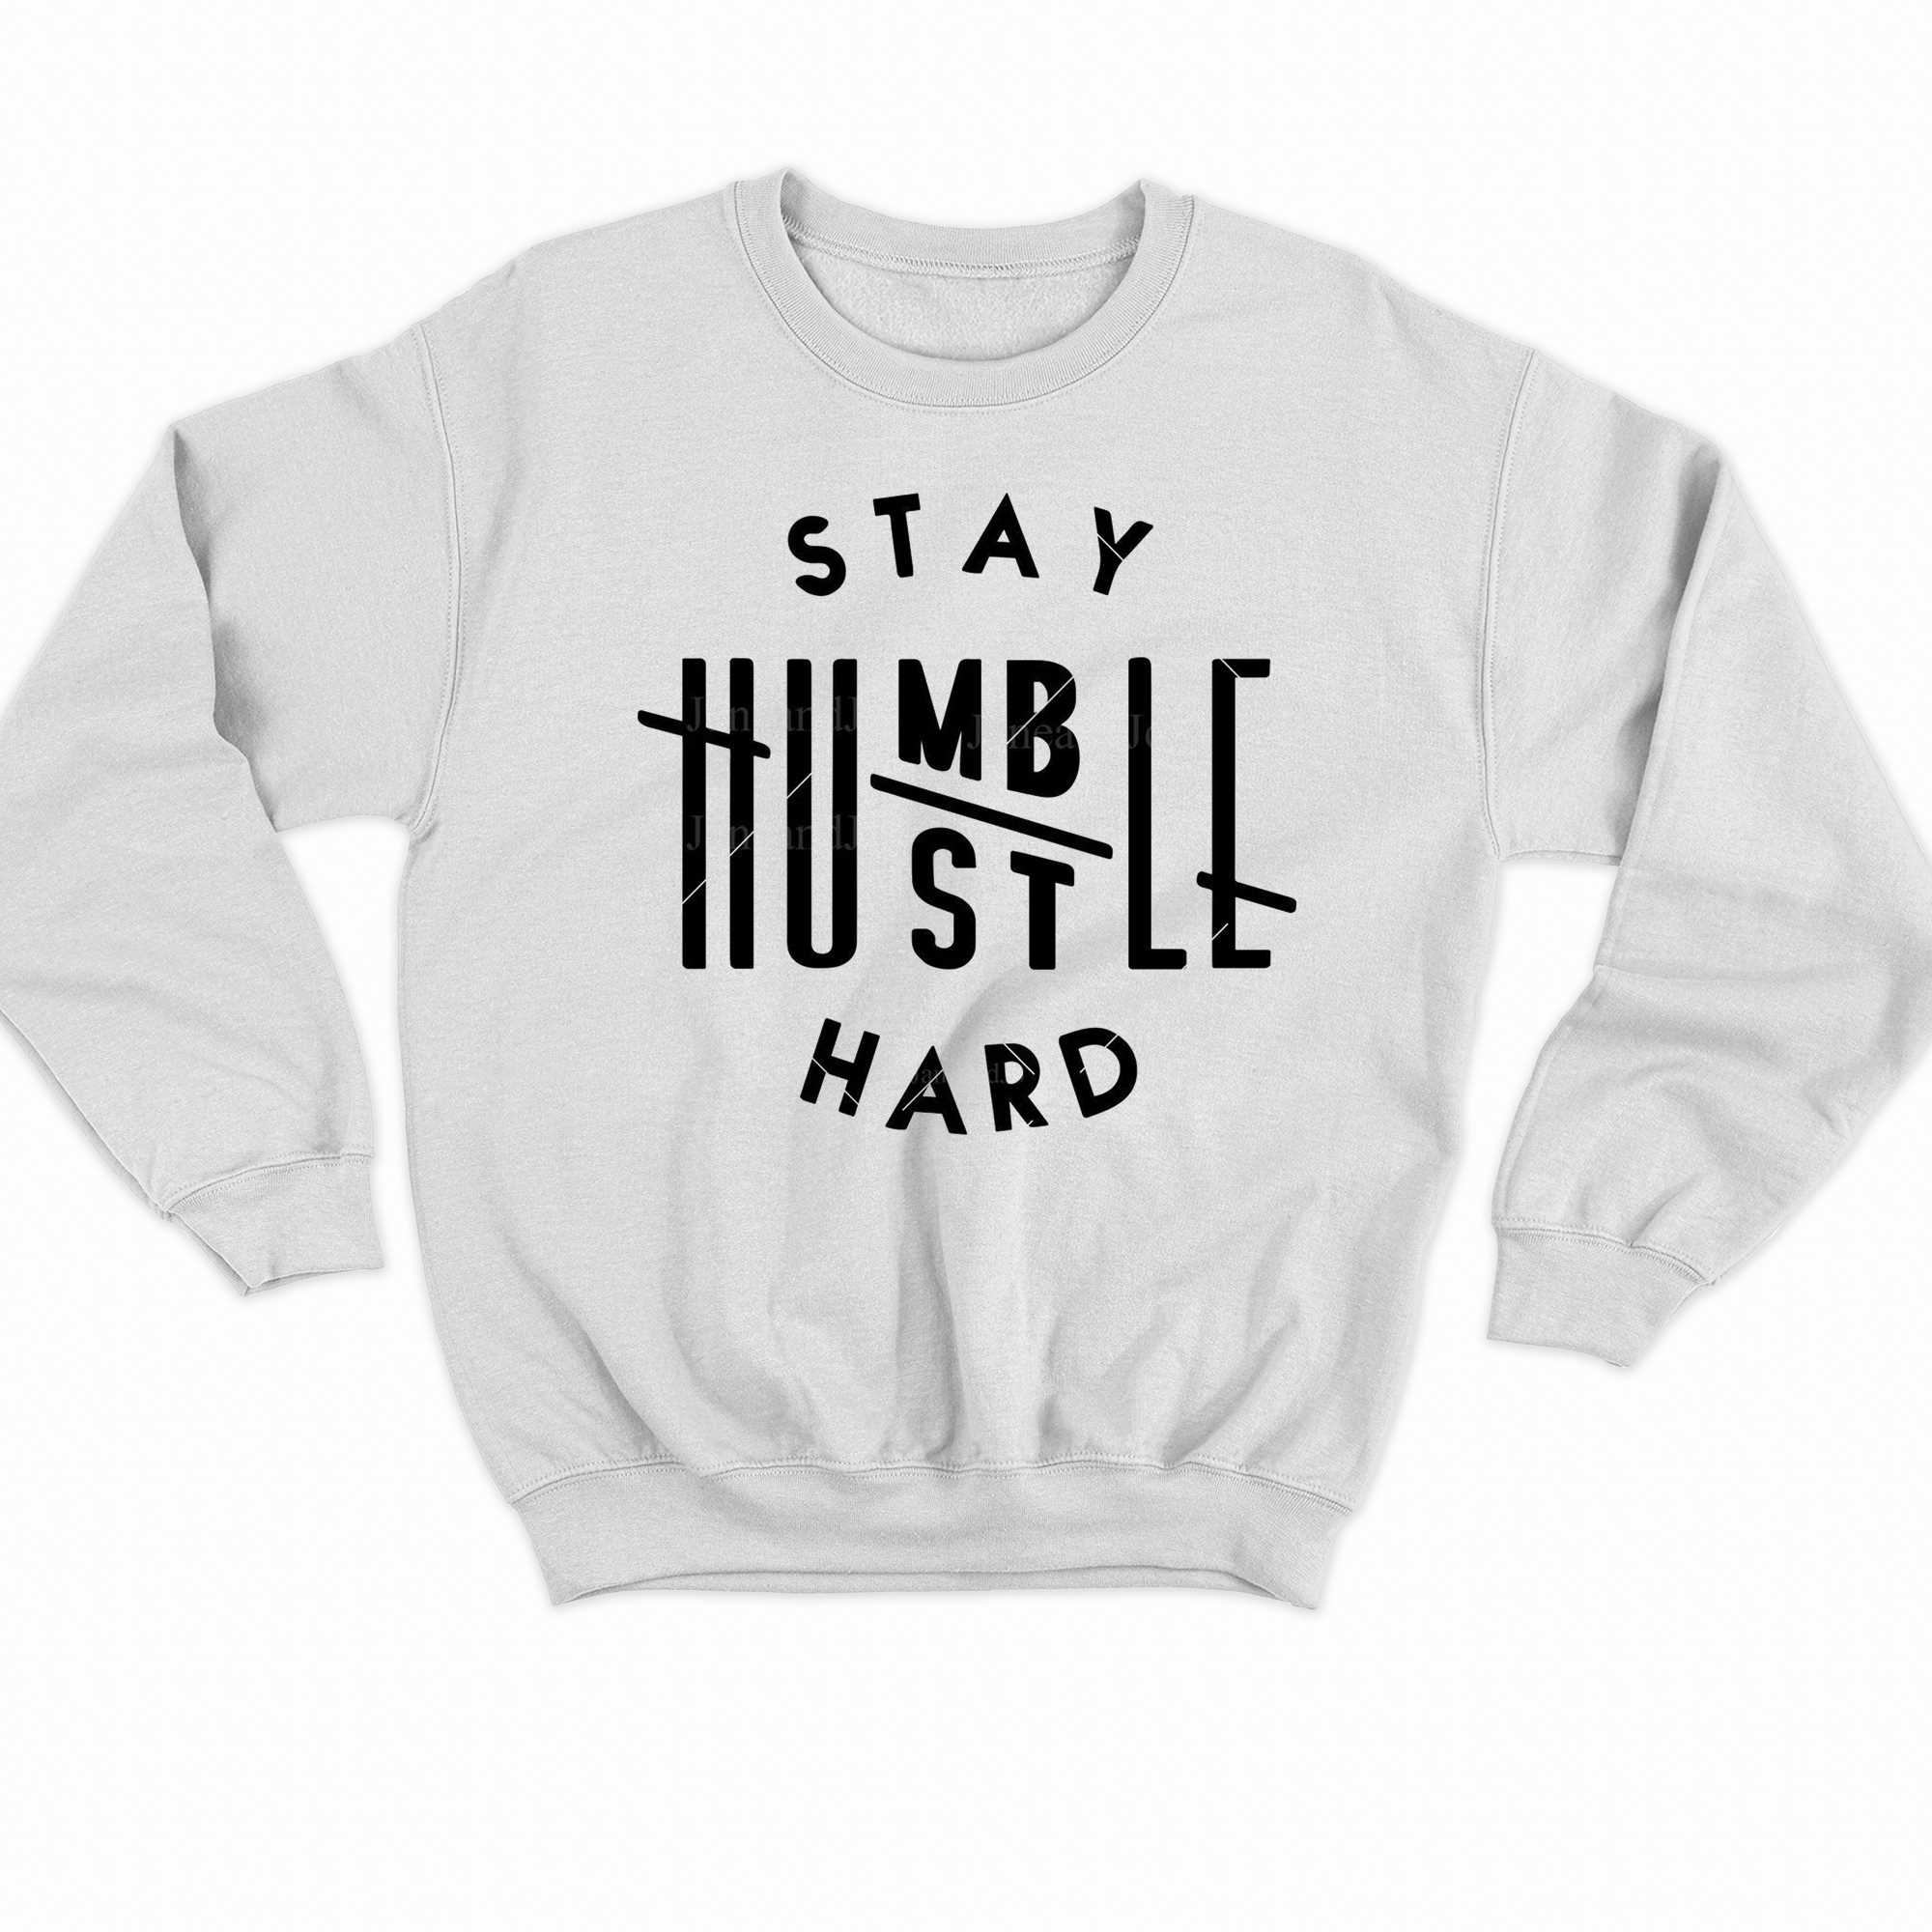 Stay Humble Hustle Hard T-shirt 